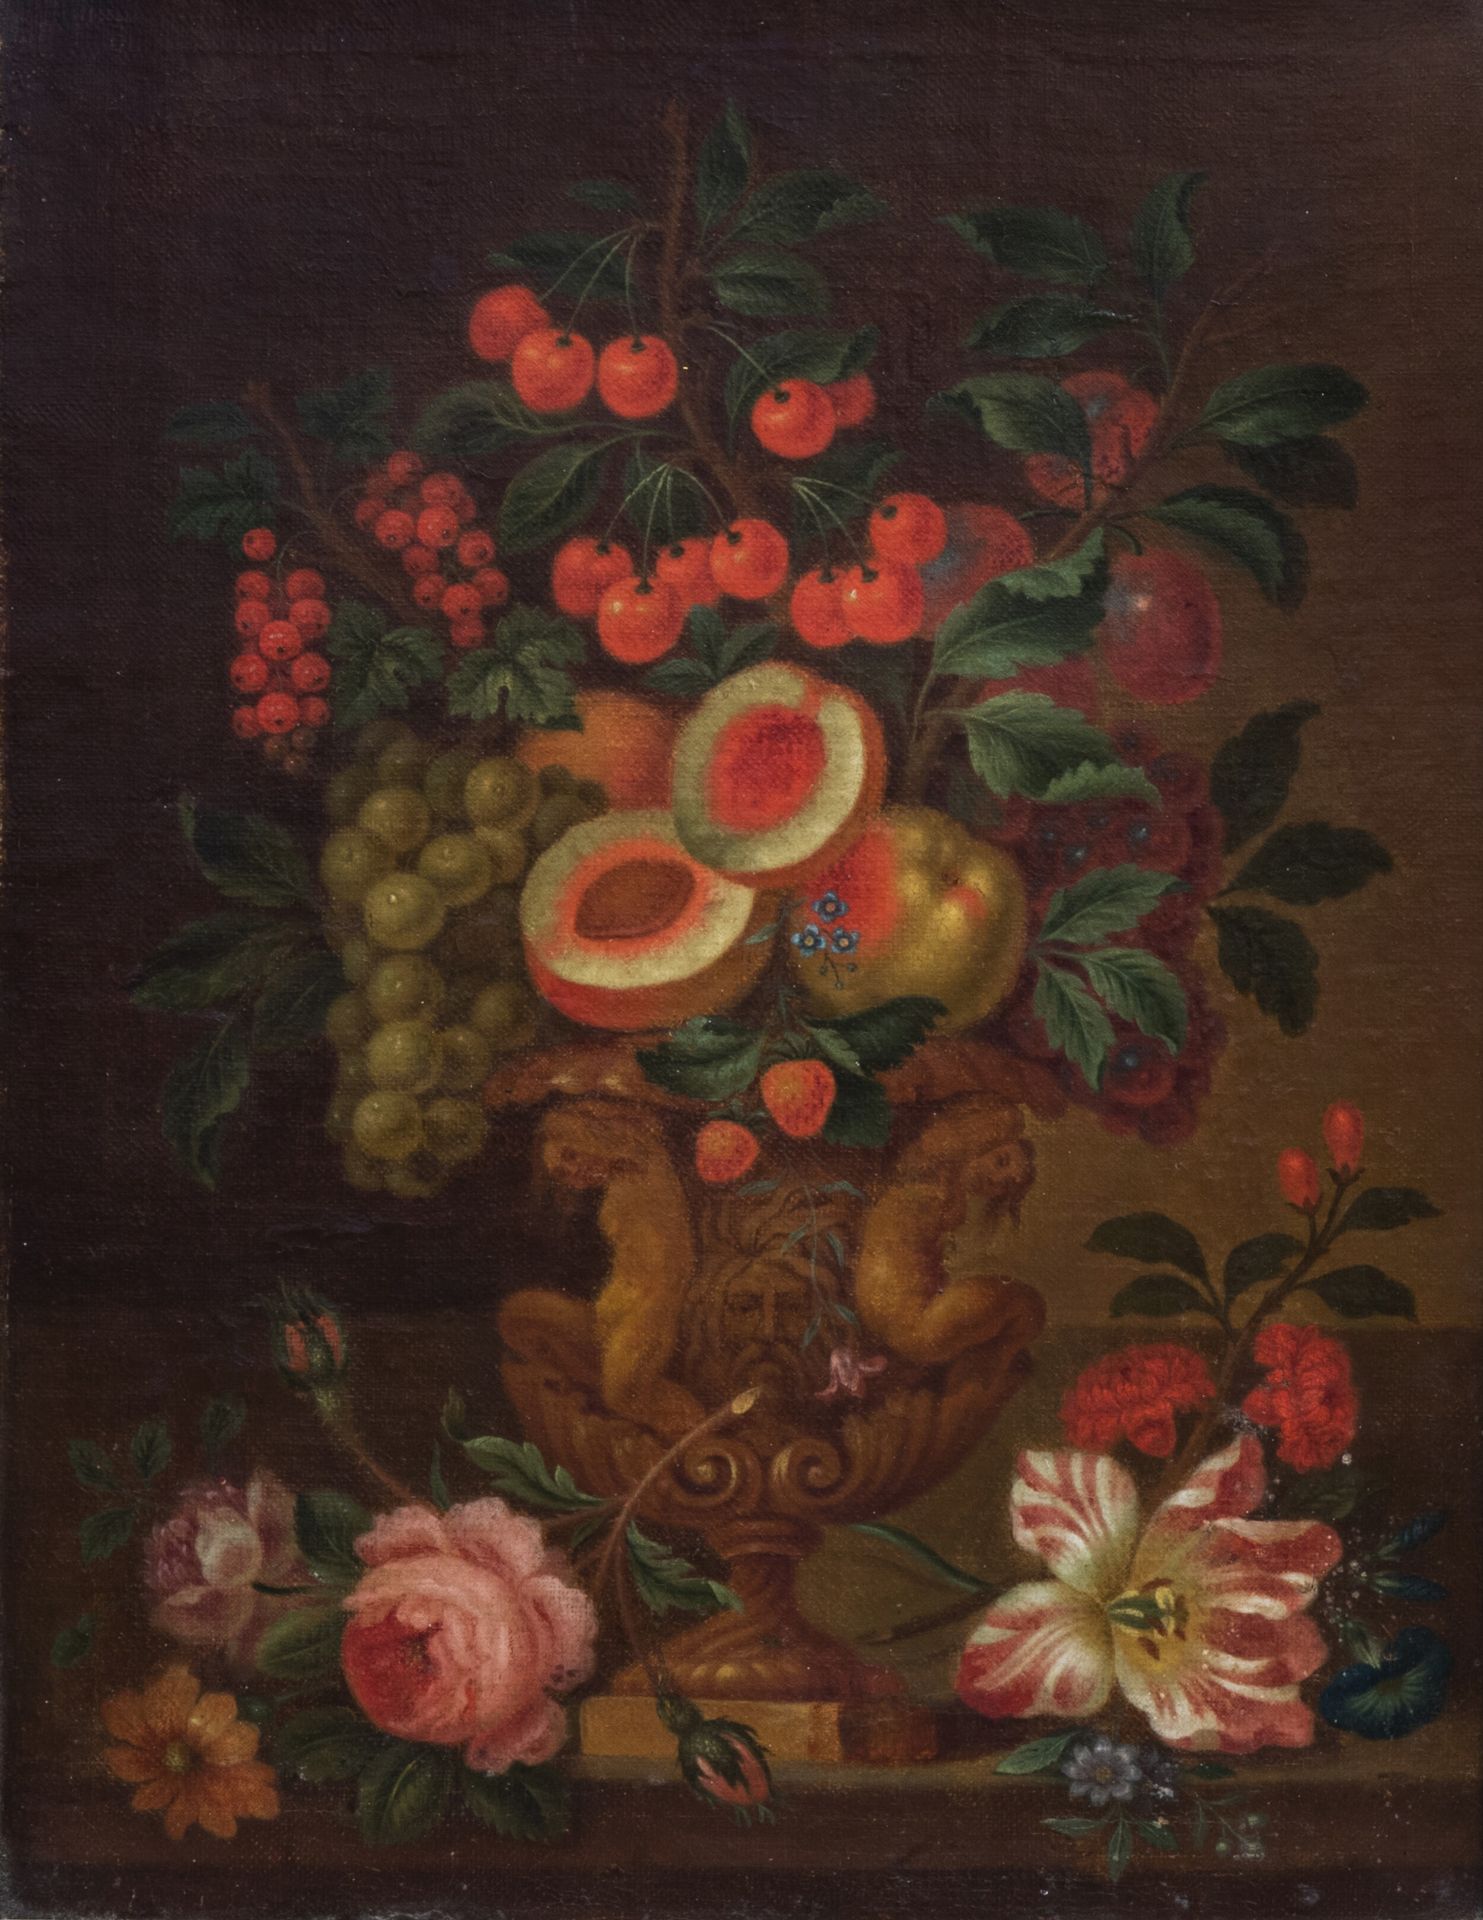 European school: Still life of flowers, oil on canvas, 19th C.